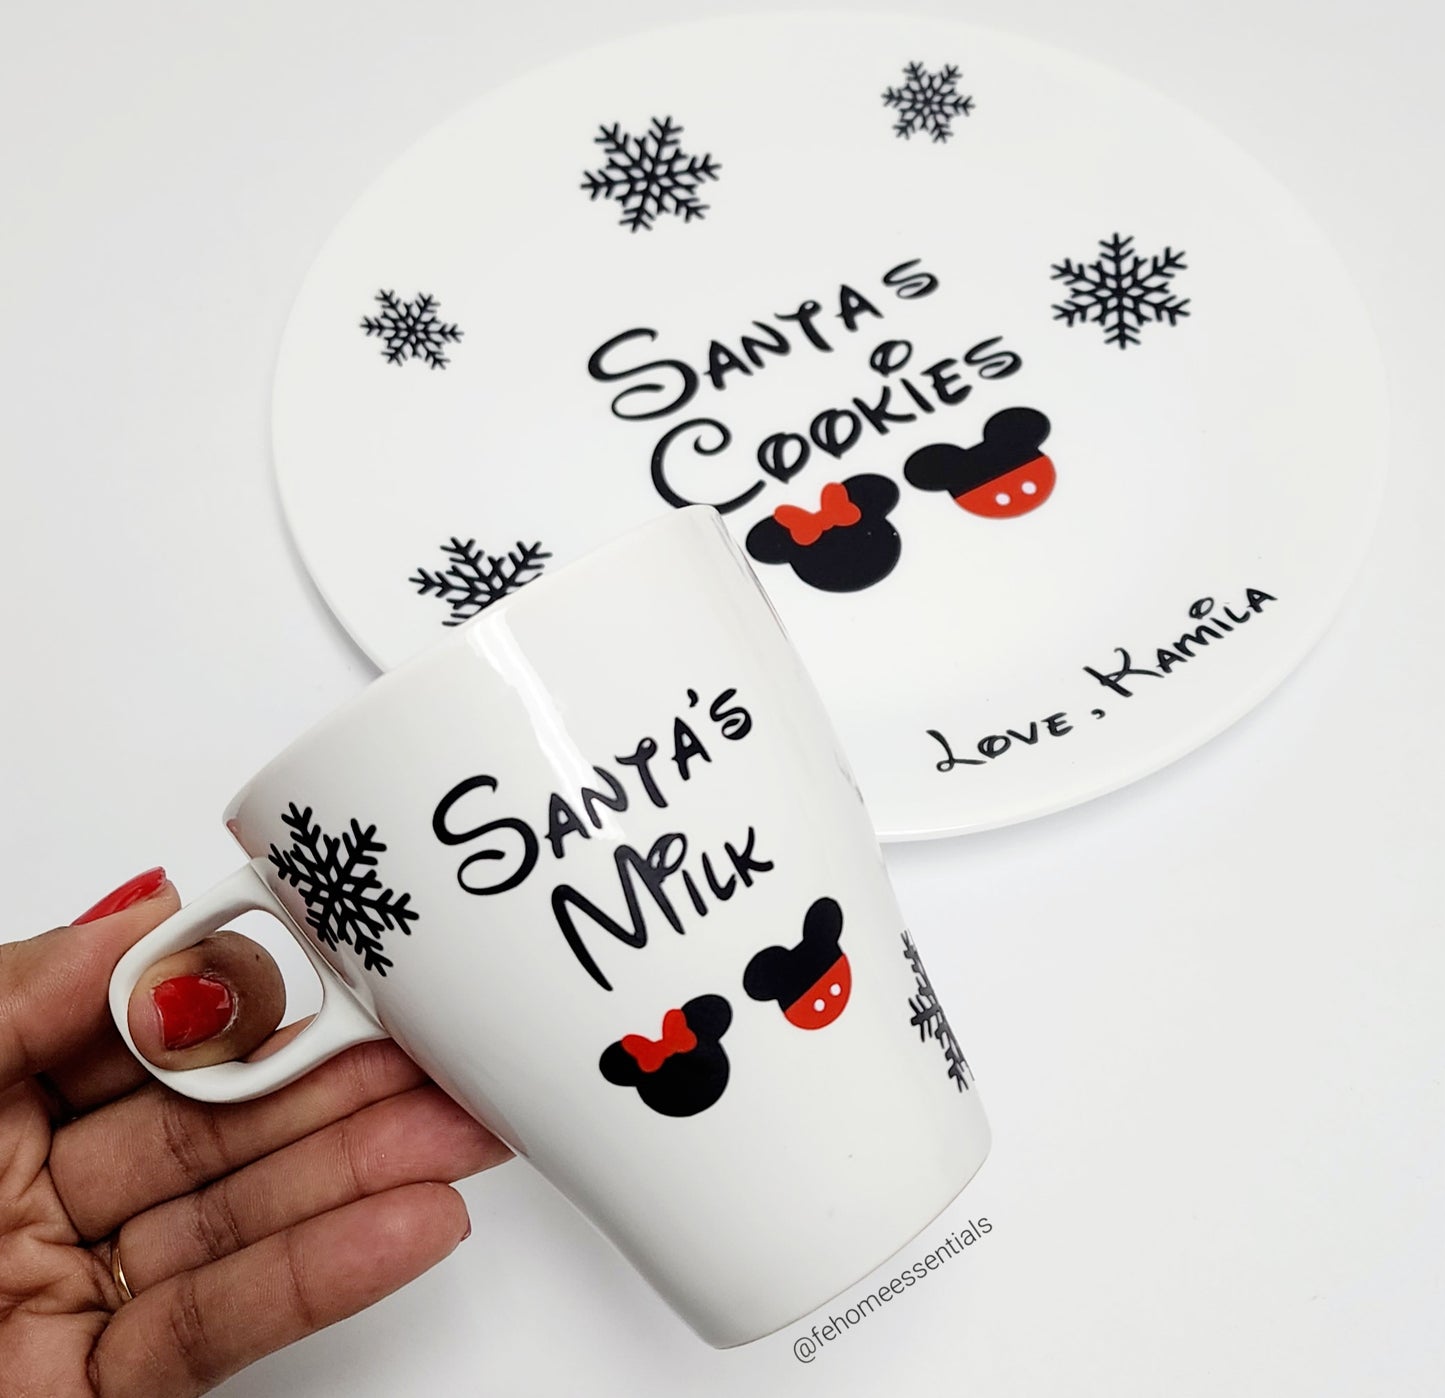 Santa's Cookies and Milk Set